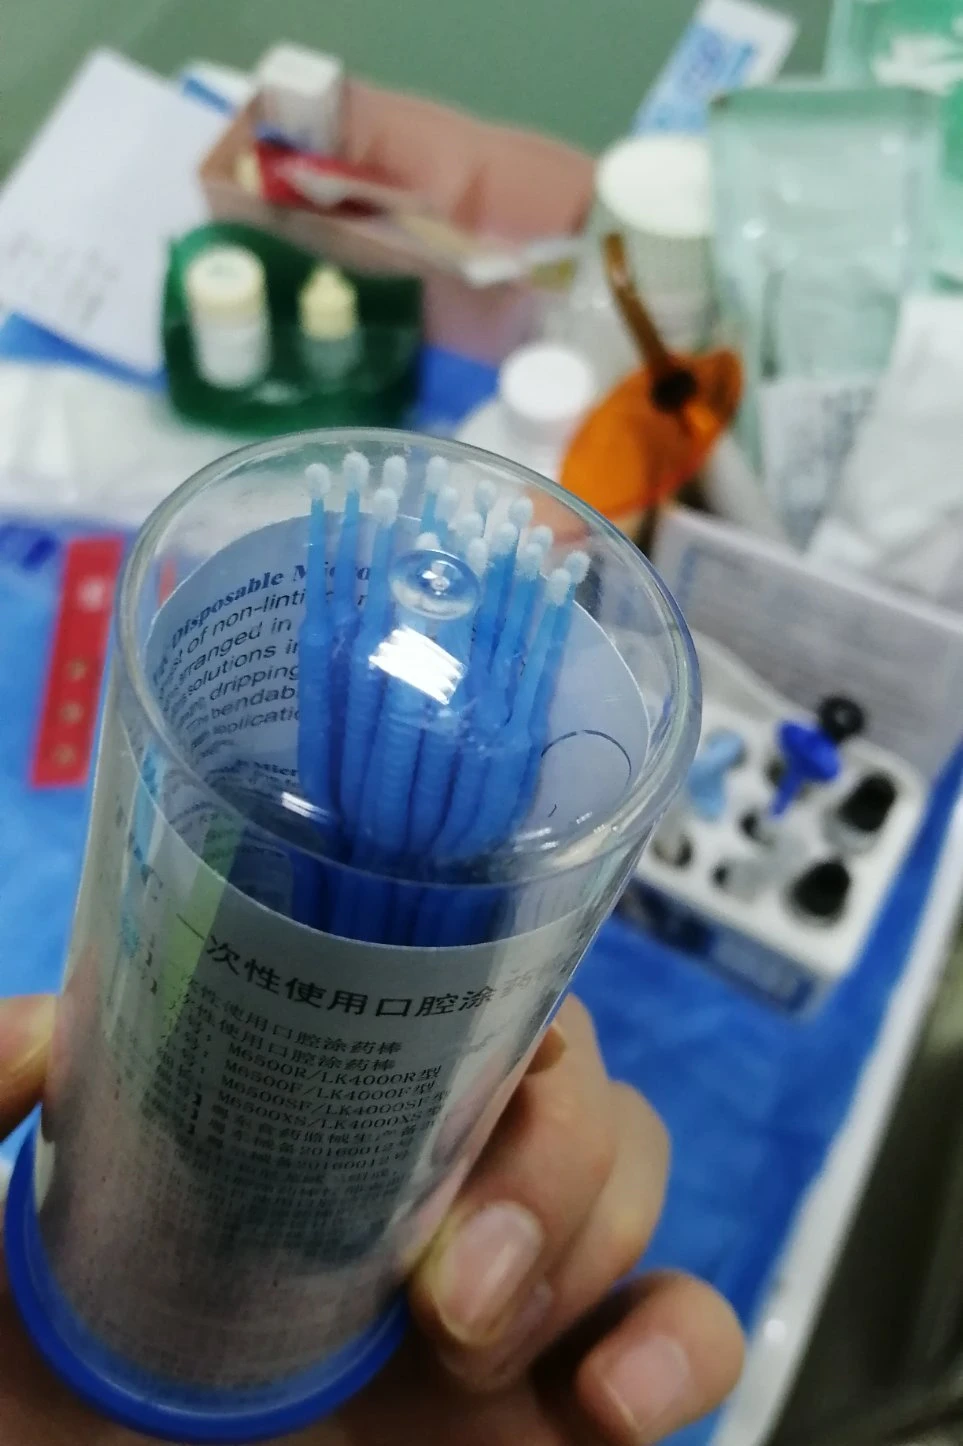 Green Dental Micro Brush Eyelash Extension Disposable Microbrush Applicator